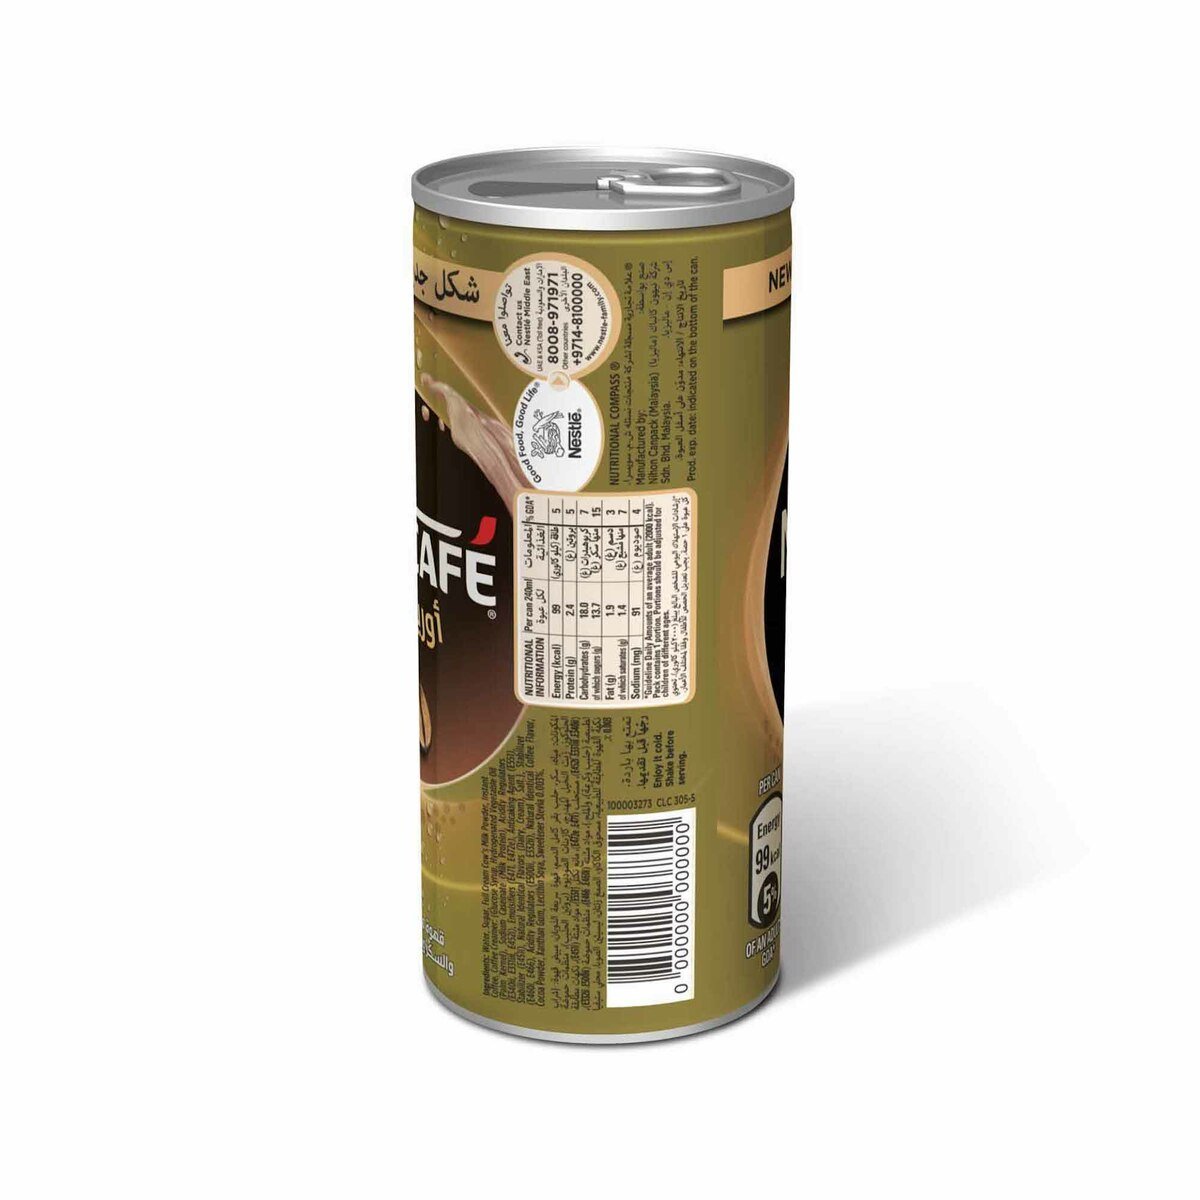 NESCAFÉ® Ready To Drink Latte Chilled Coffee